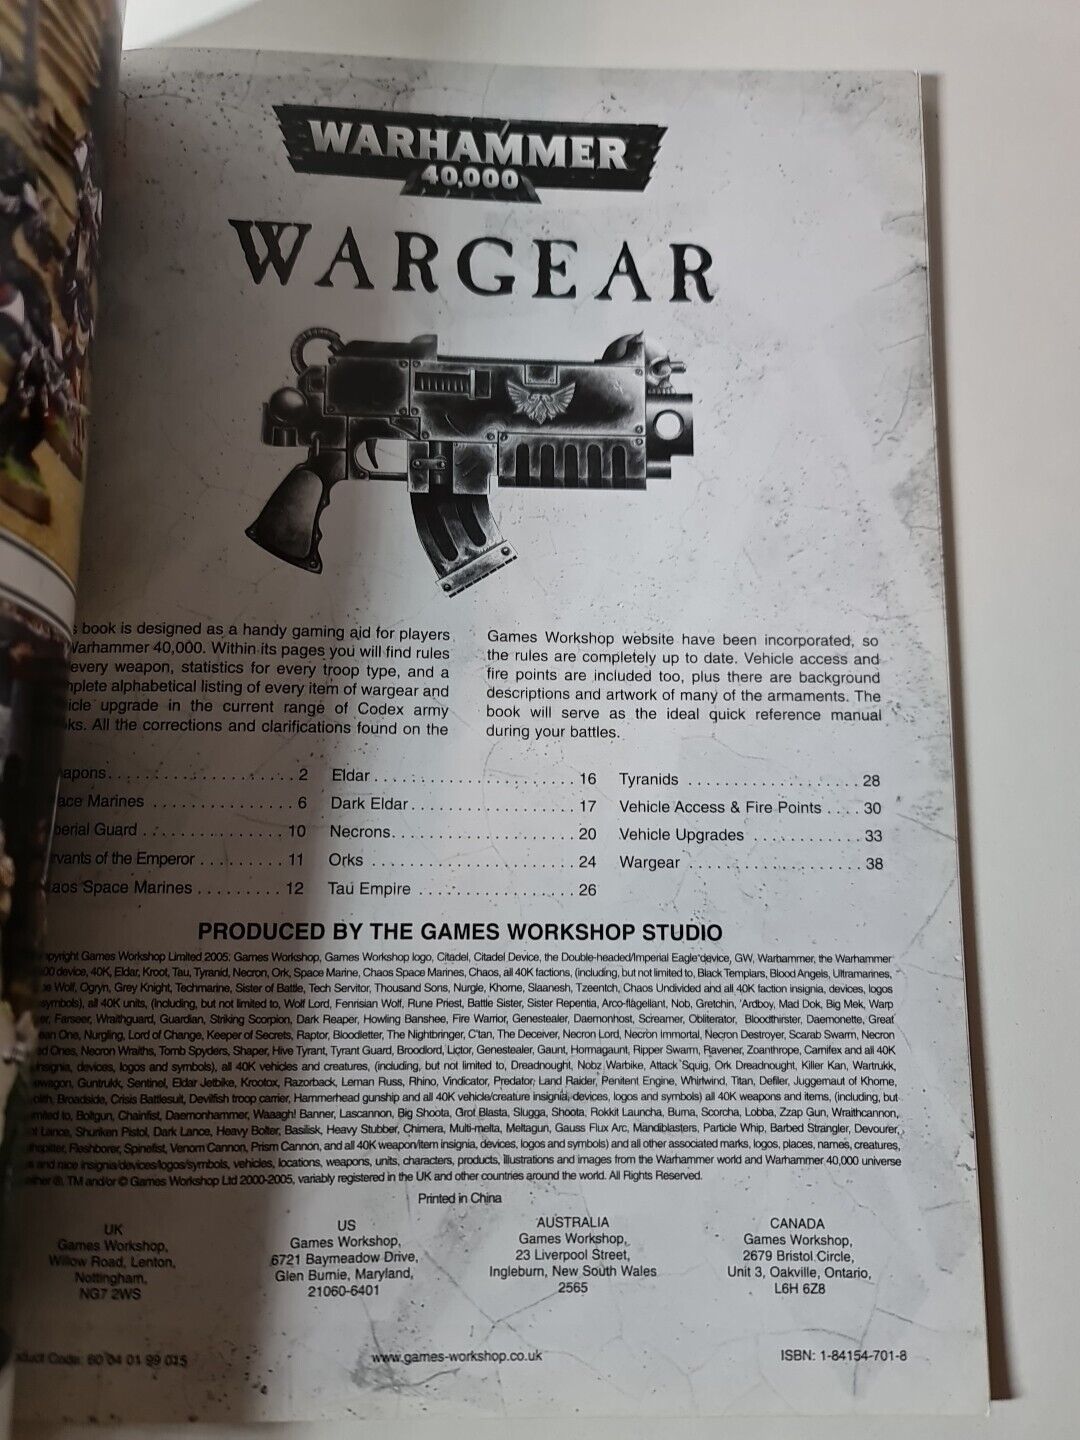 Warhammer 40,000 Wargear - Weapons & Wargear Reference Manual (2006)